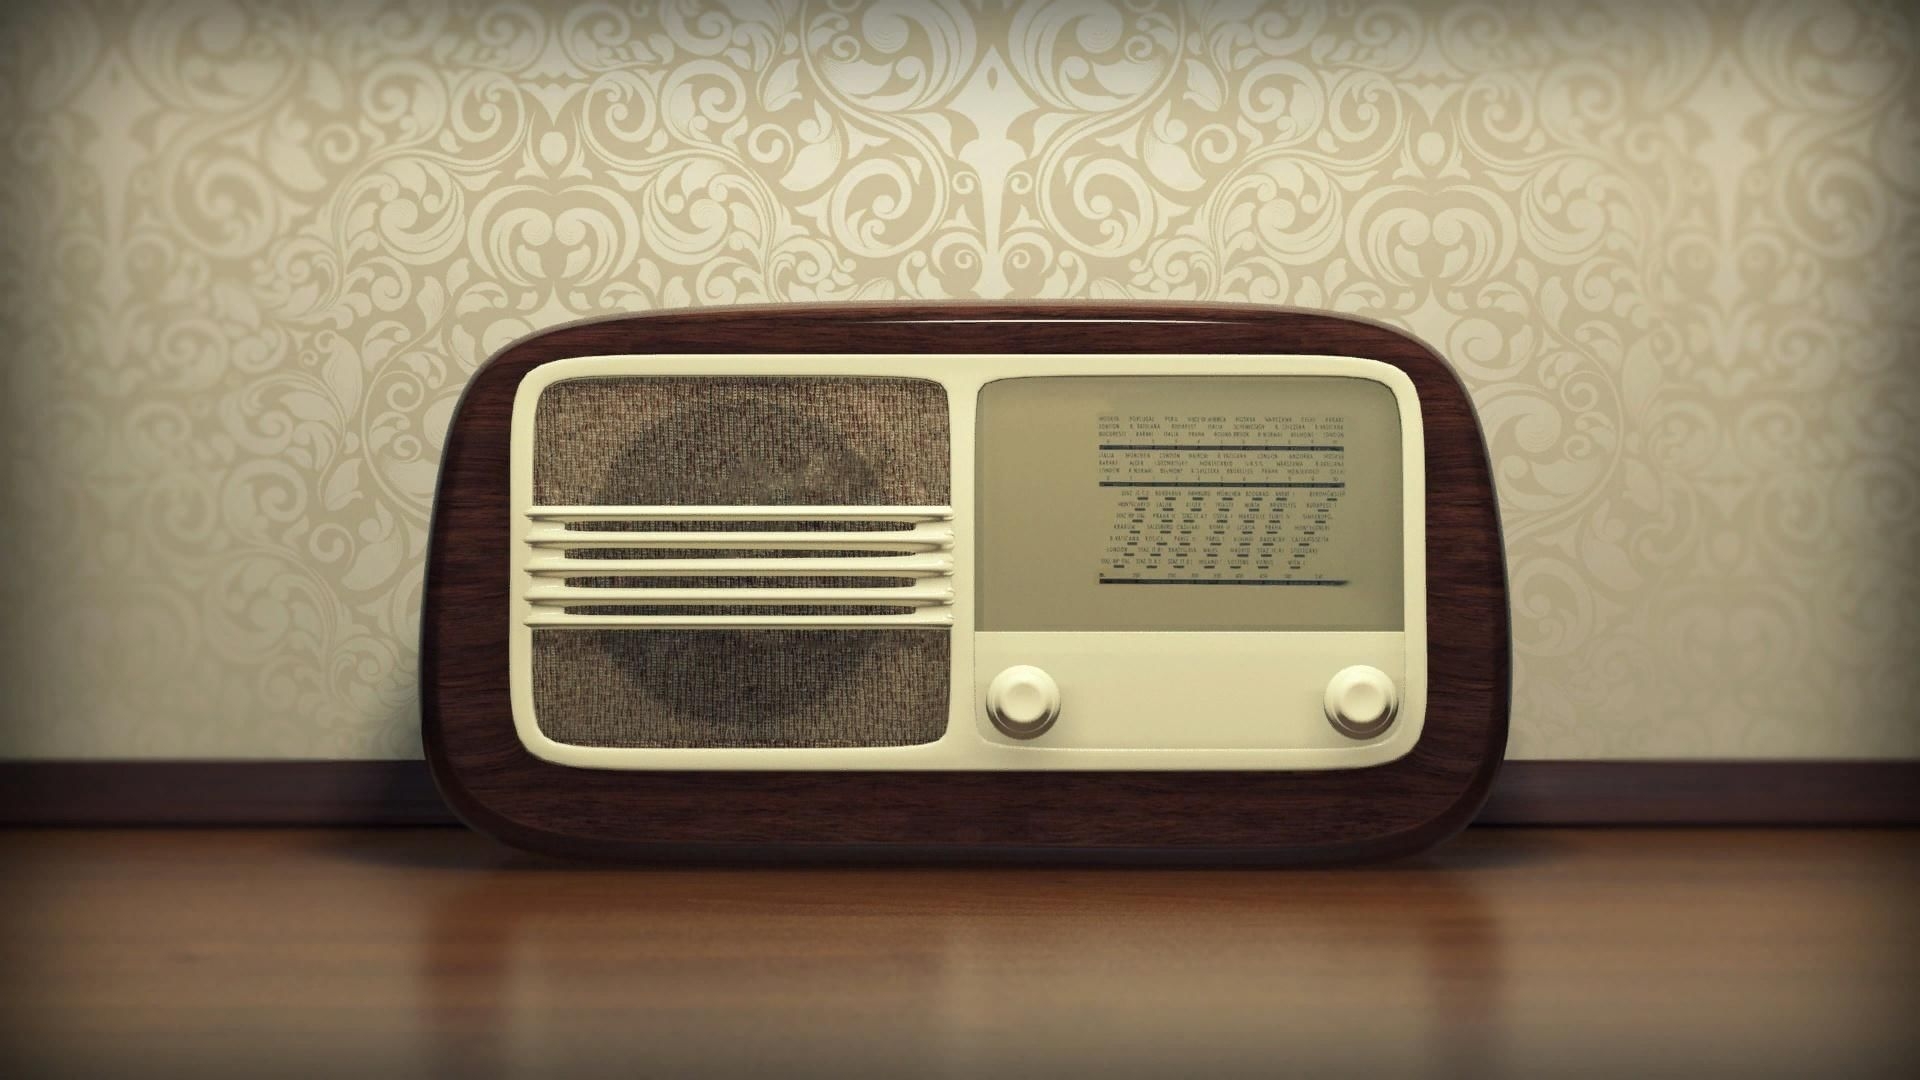 Радиоканалы радио